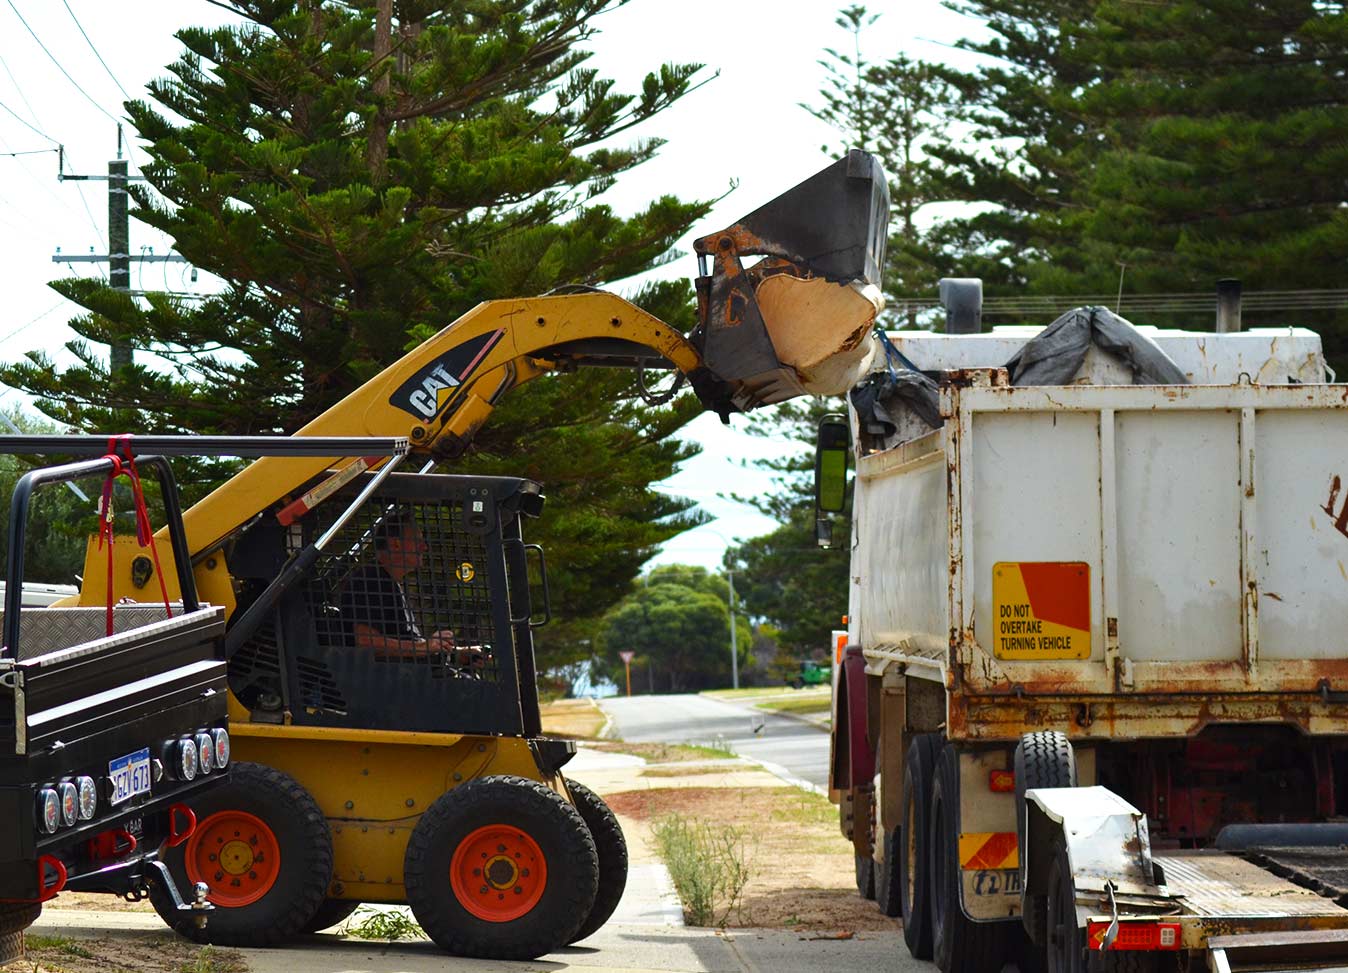 Jordans Tree Services Expert Log Branch Cleanup Removal Storm Damage Rockingham Baldivis Mandurah Kwinana Cockburn WA